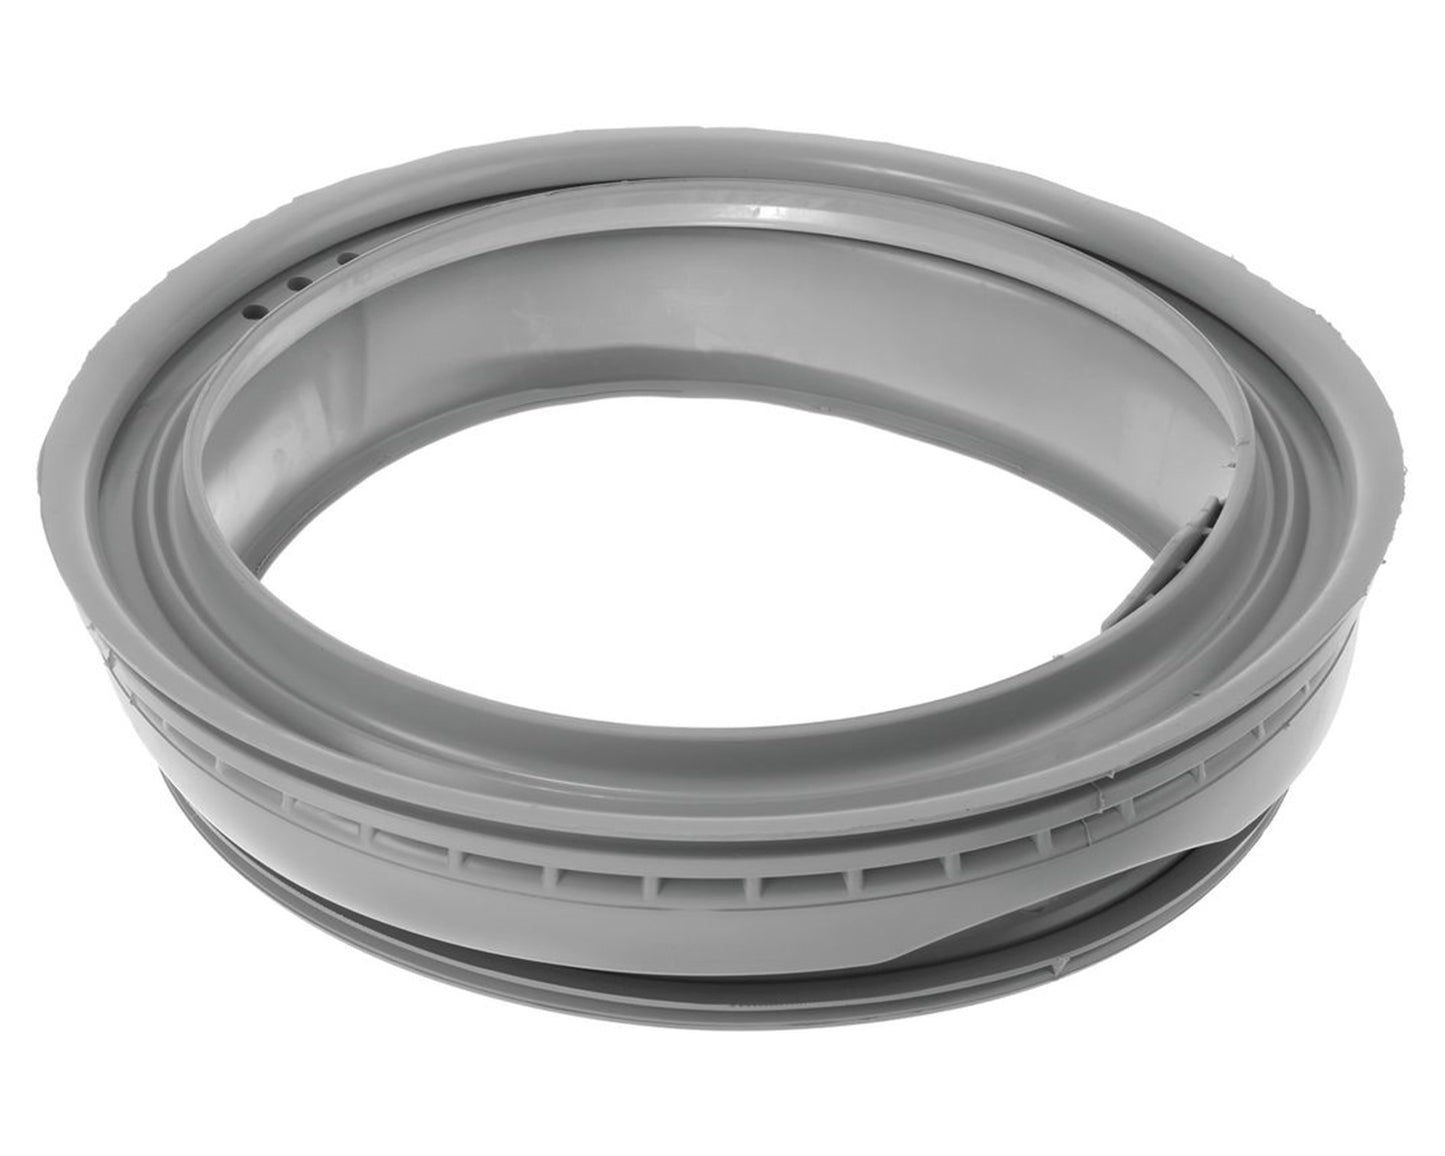 Washing Machine Rubber Door Gasket Seal for Neff W5340X0GB/15 W5340X0GB/26 - 00354135